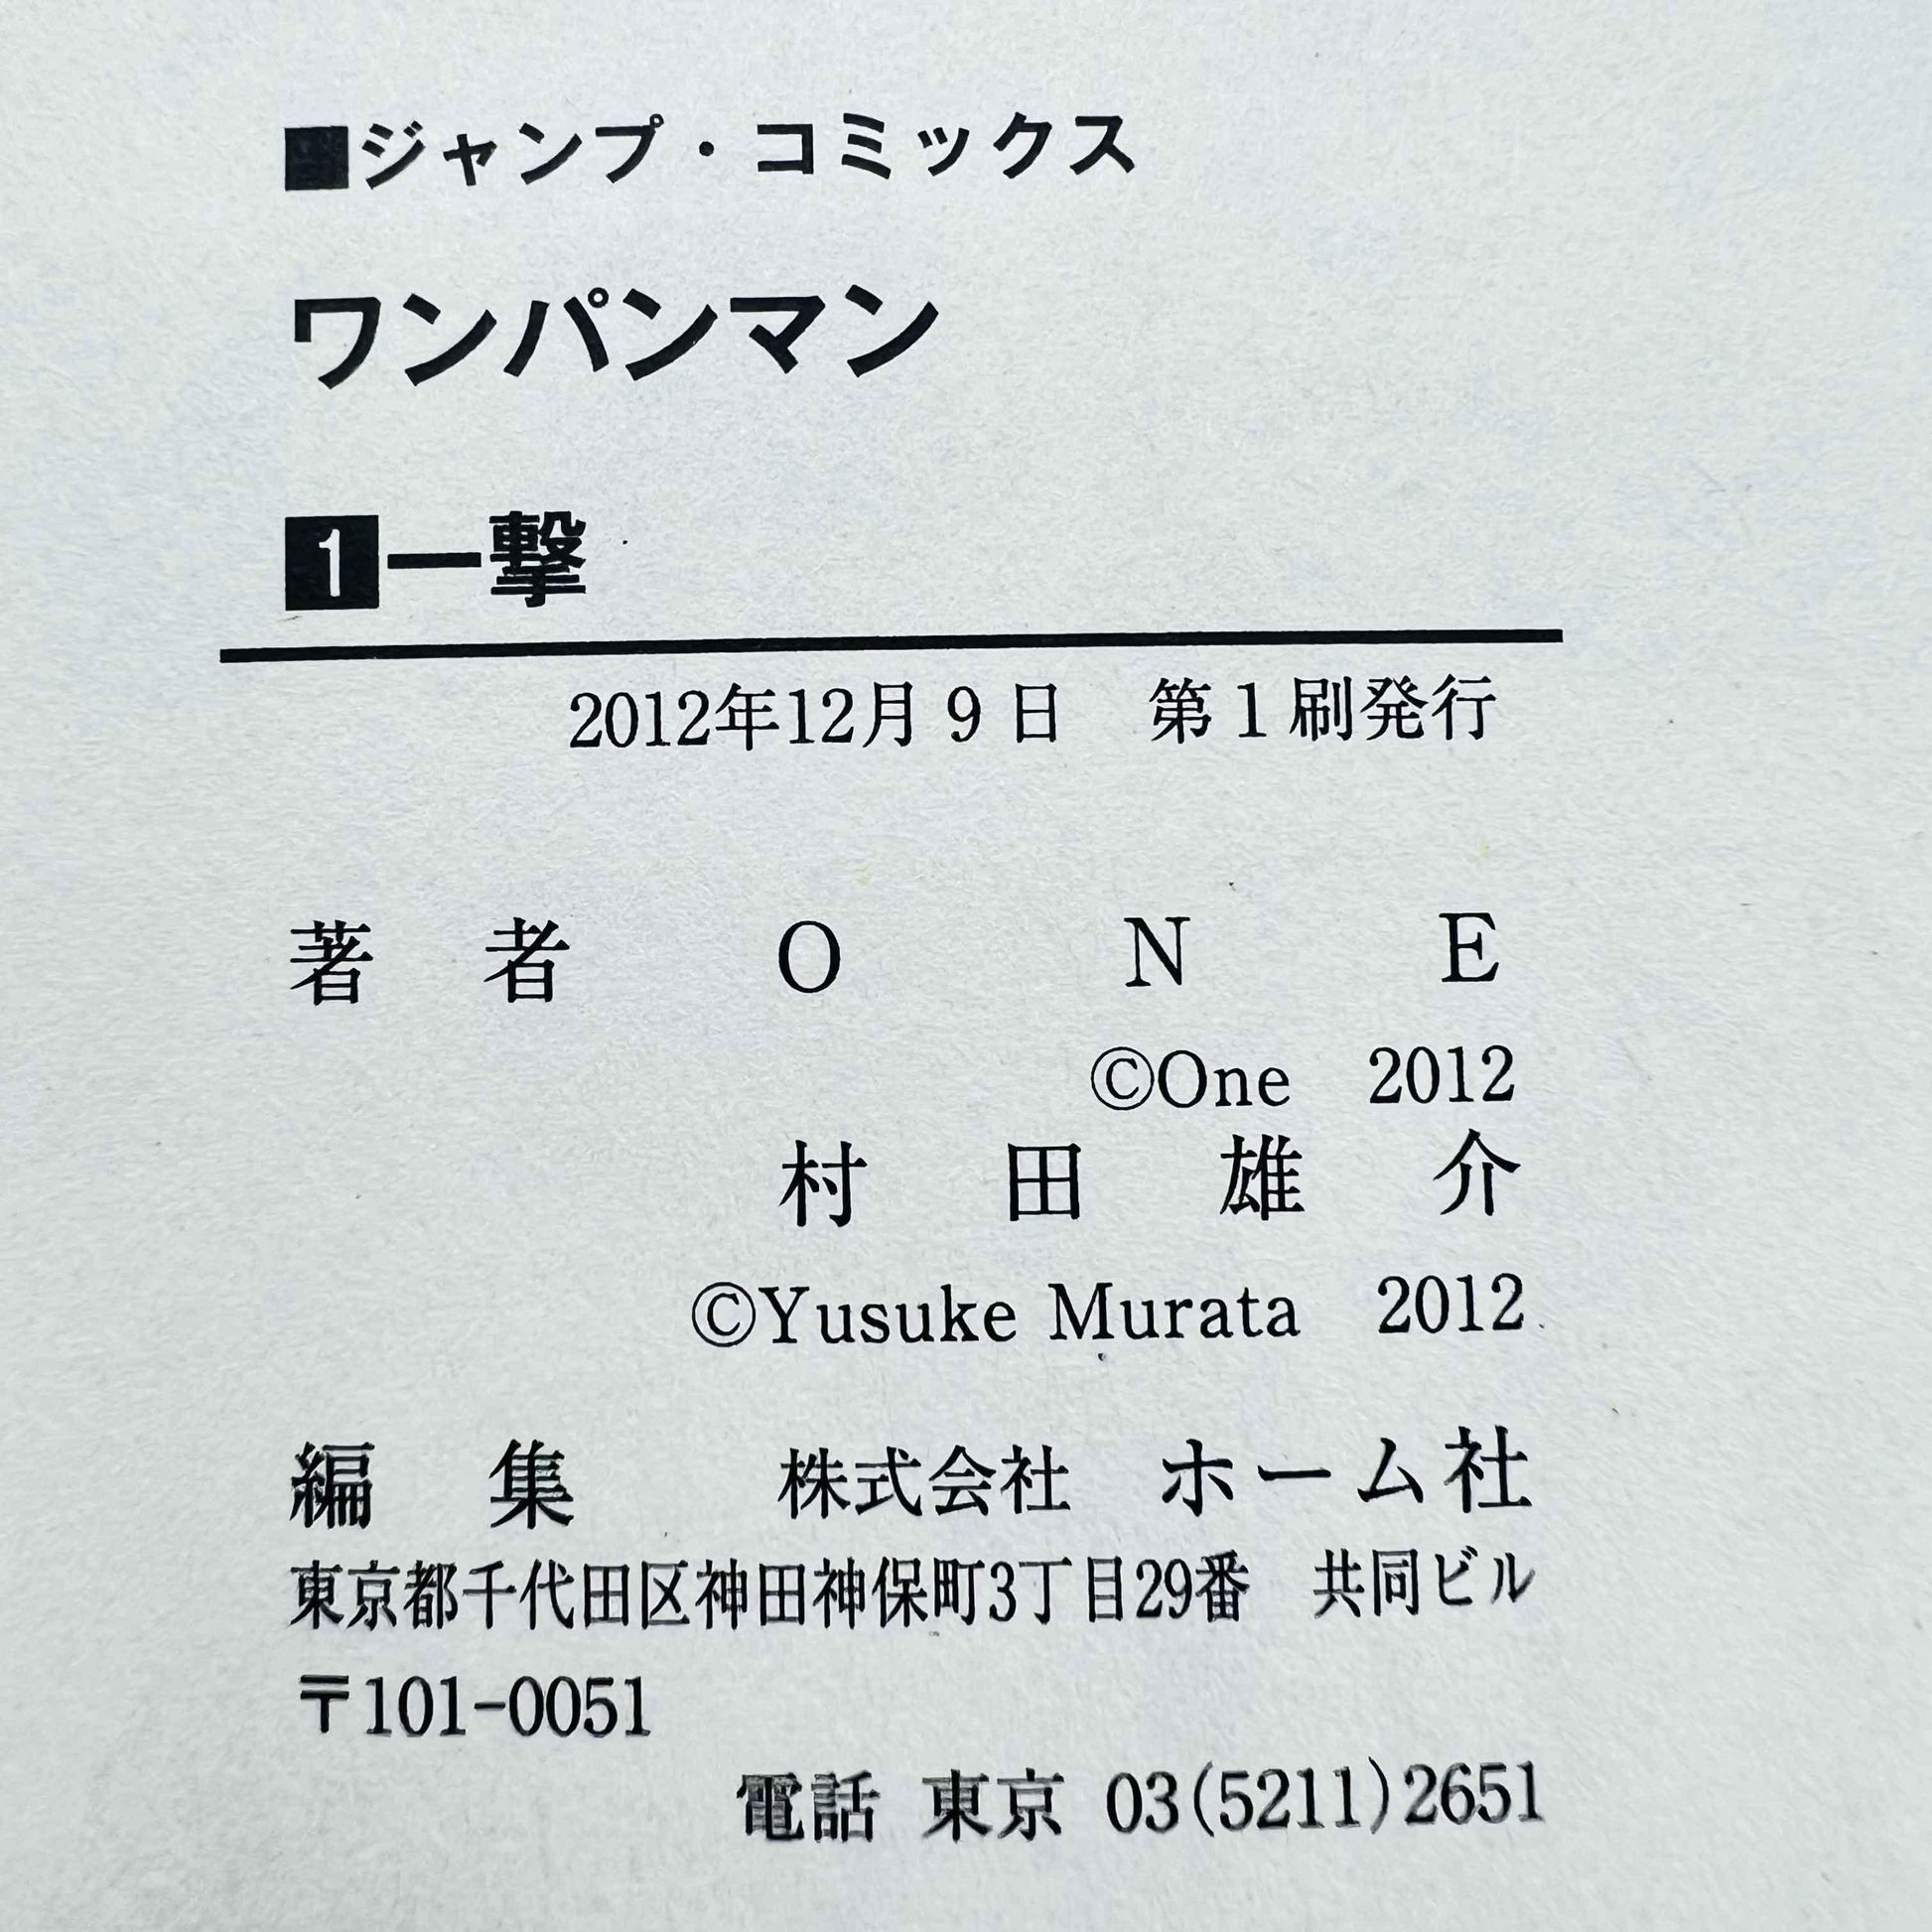 One Punch Man - Volume 01 - 1stPrint.net - 1st First Print Edition Manga Store - M-OPM-01-004